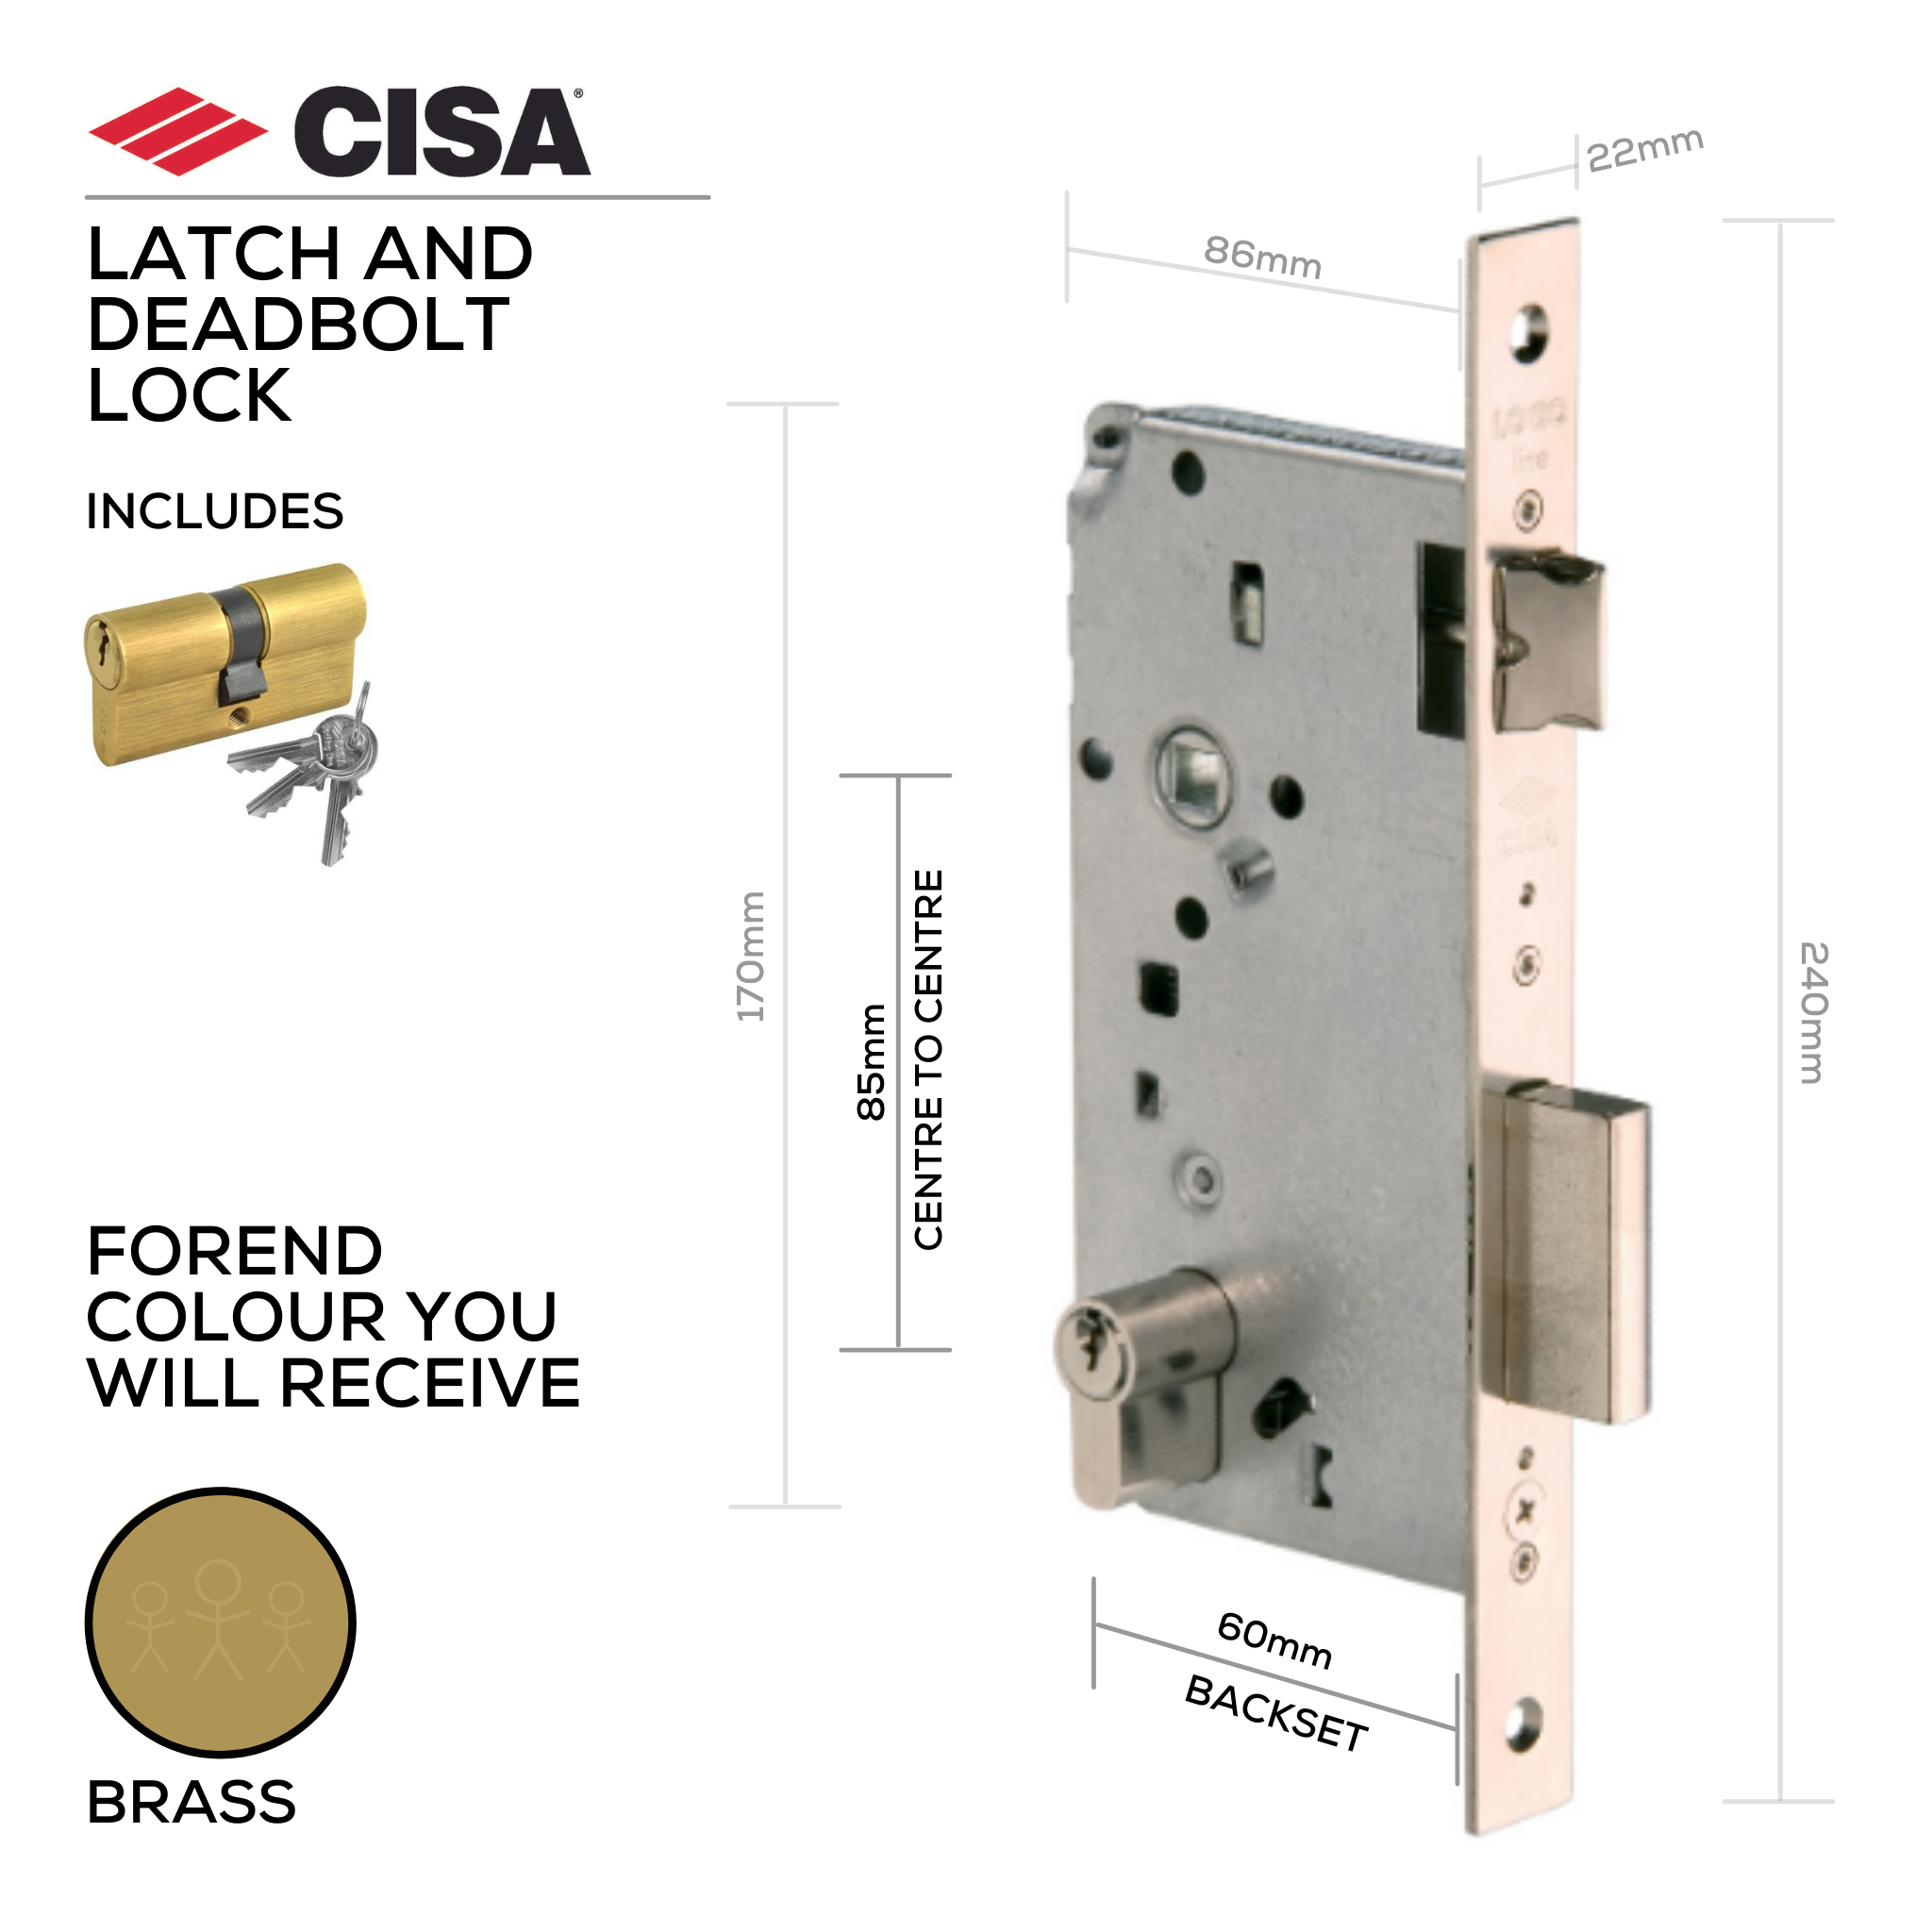 5C611-60-00_W/Cylinder, Latch & Deadbolt Lock, Euro Cylinder, Including Cylinder, 08010-07, 3 Keys - 5 Pins, 60mm (Backset), 85mm (ctc), Brass, CISA